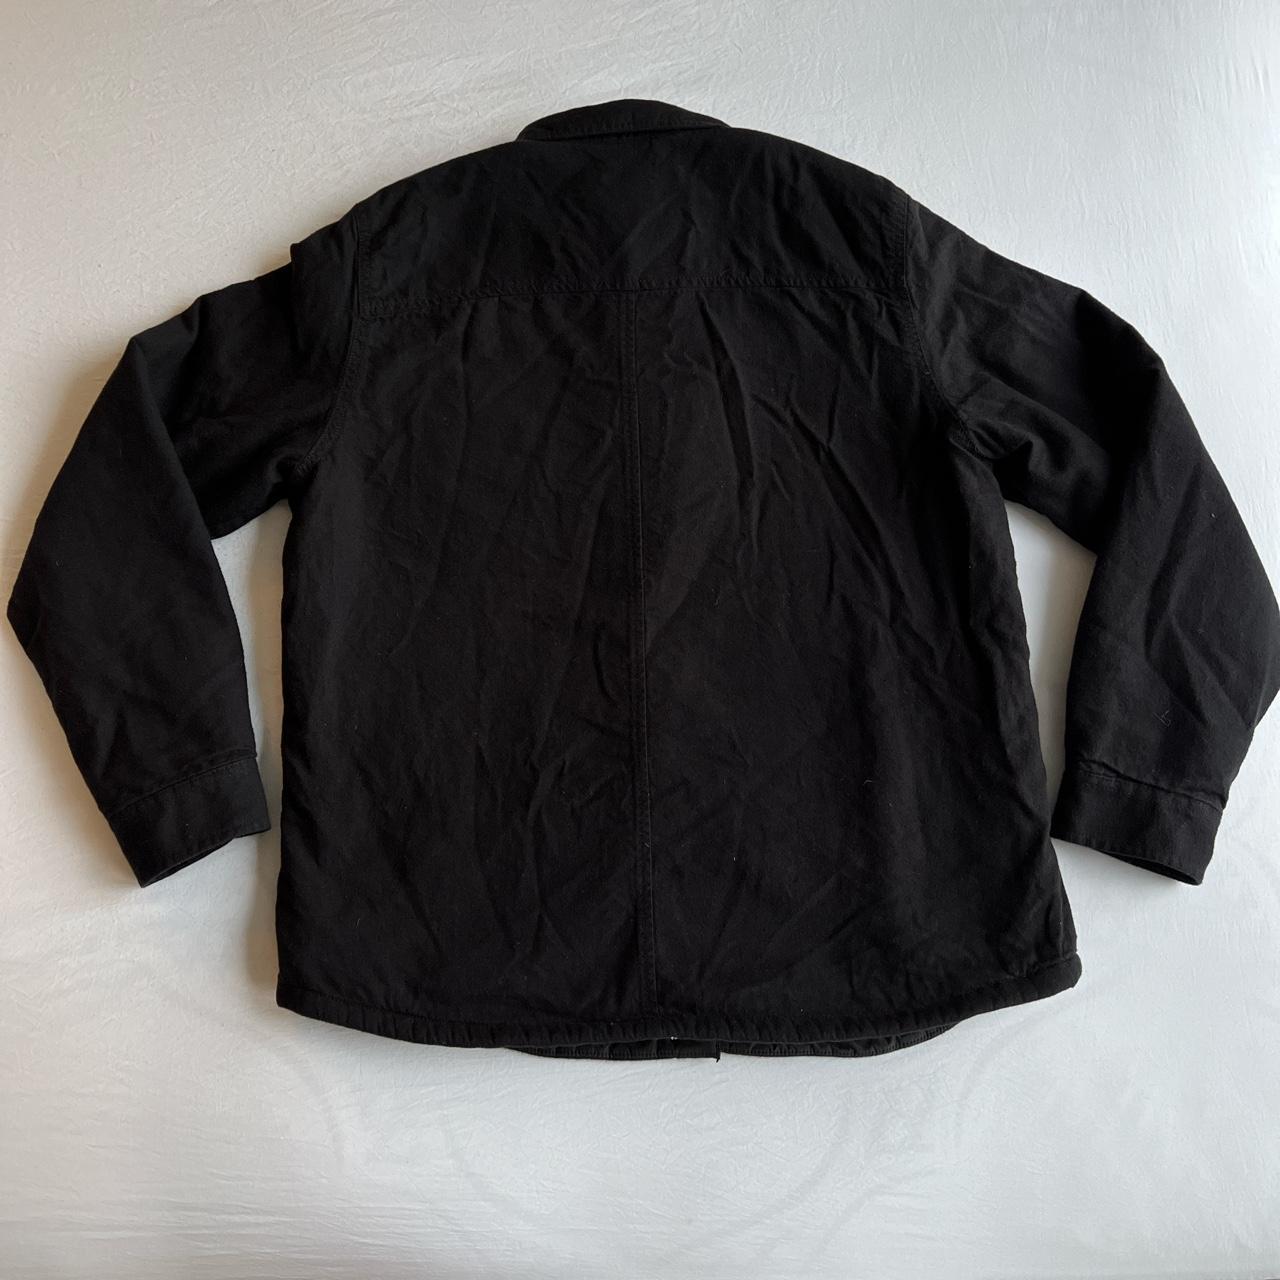 Black The North Face Sherpa-lined jacket - Soft... - Depop